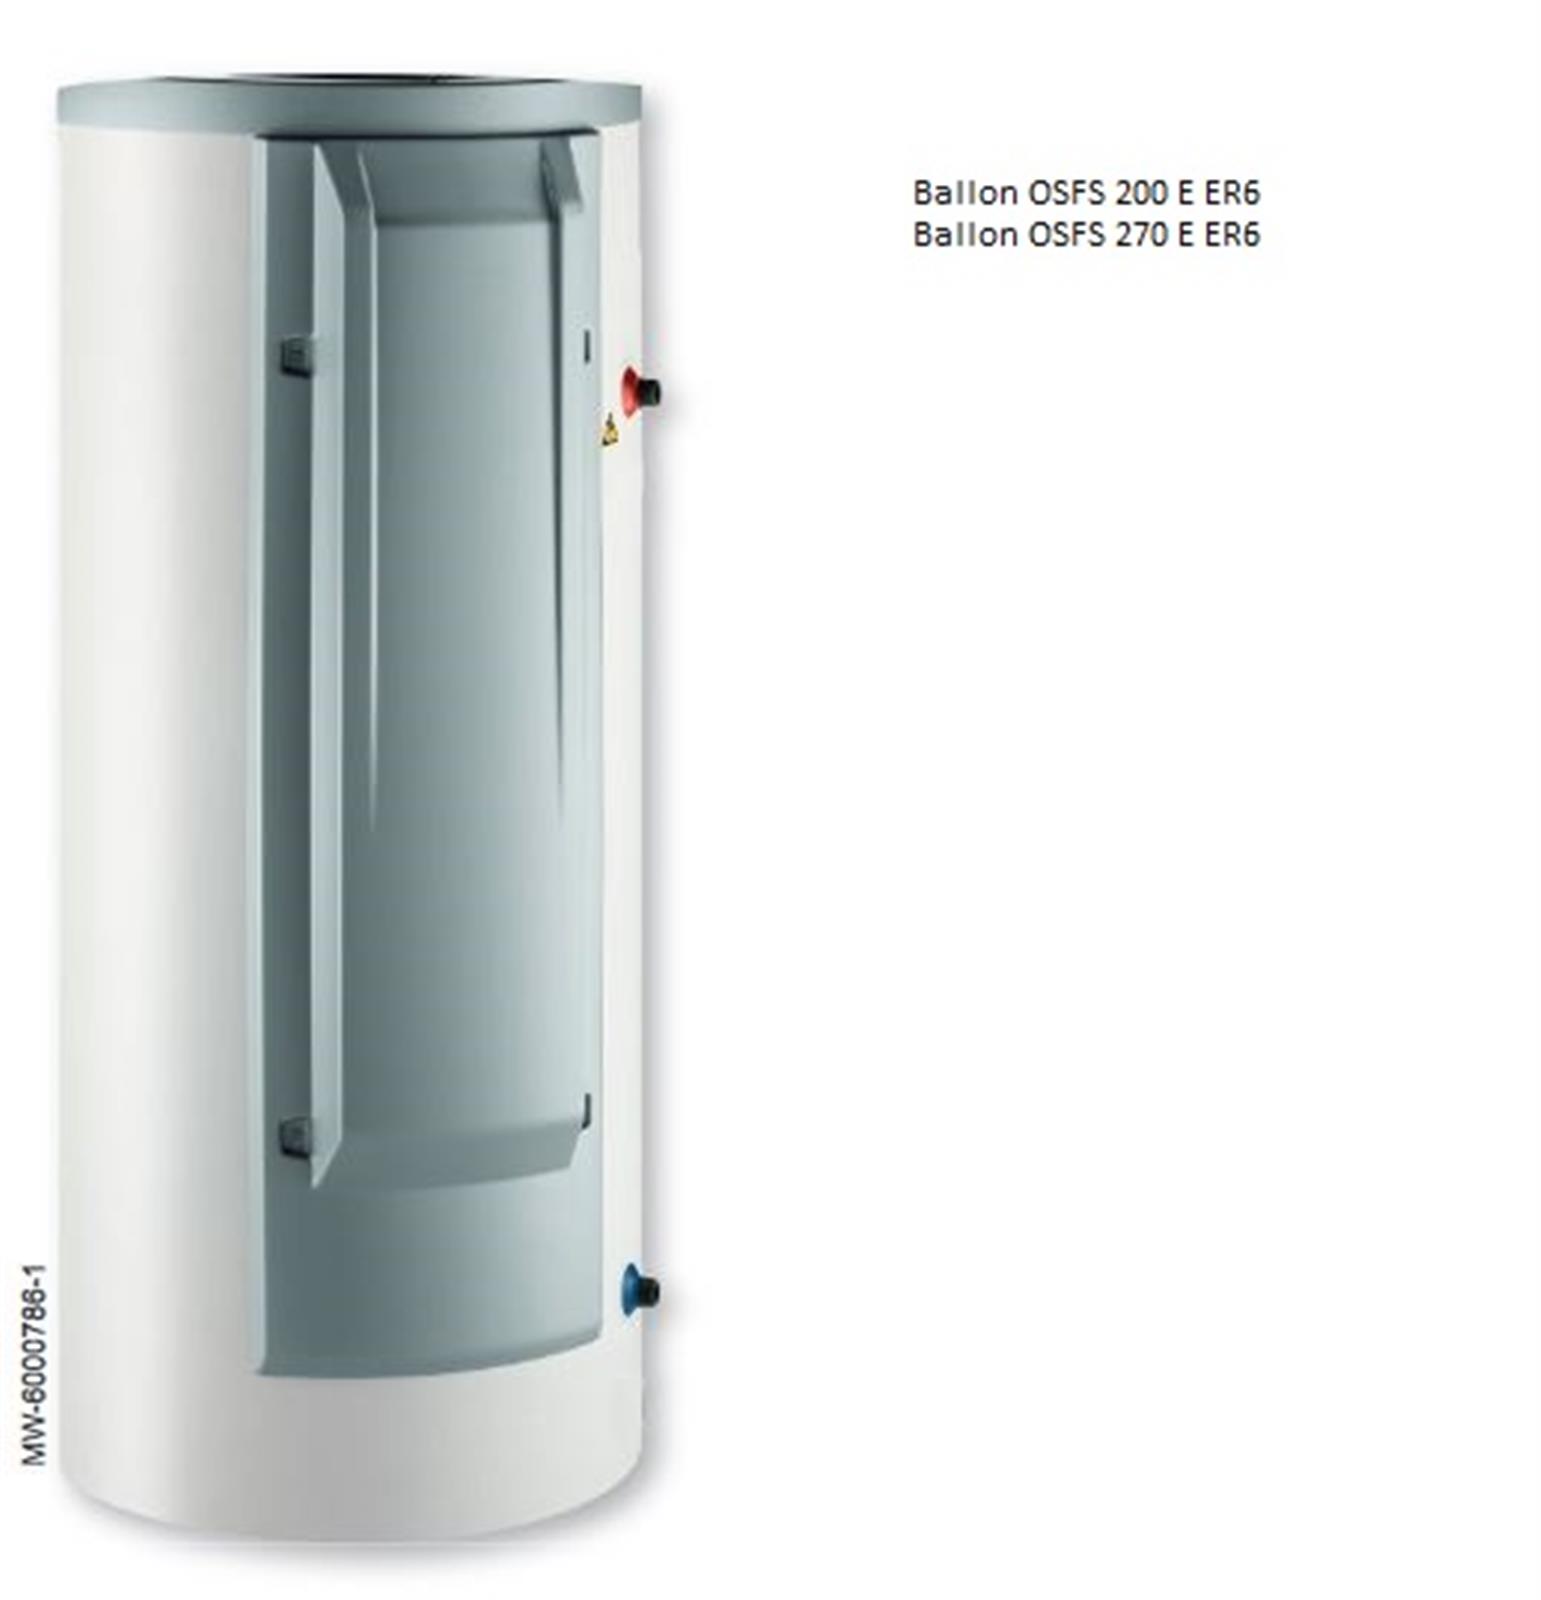 Chauffe-eau thermodynamique OSFS E ER6 - Capacité : 270L